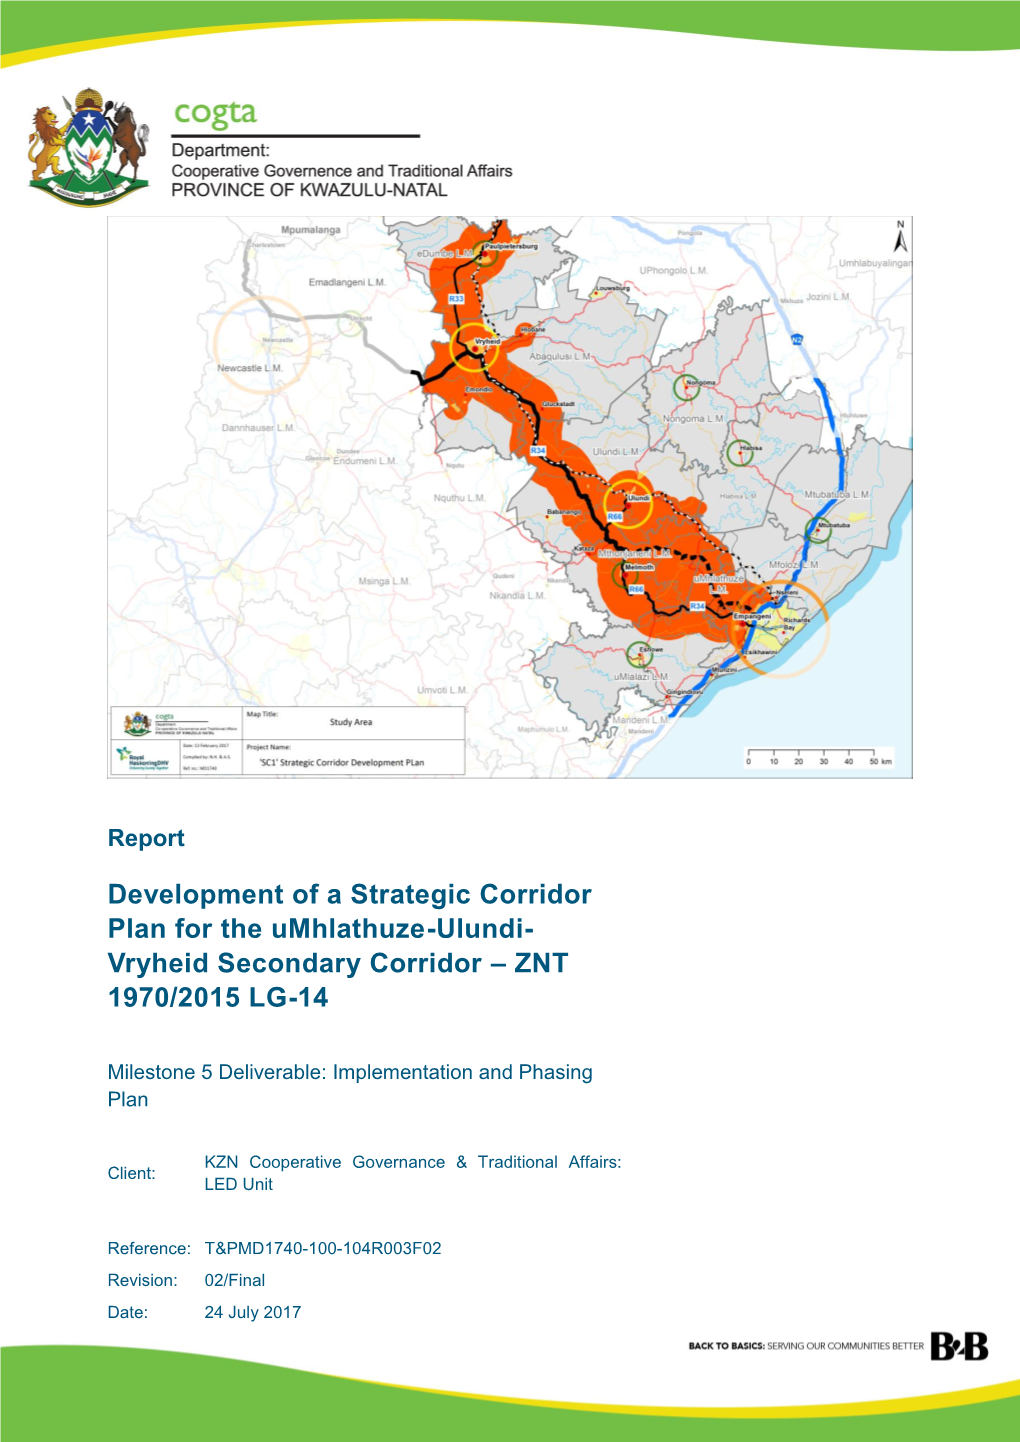 Development of a Strategic Corridor Plan for the Umhlathuze-Ulundi- Vryheid Secondary Corridor – ZNT 1970/2015 LG-14